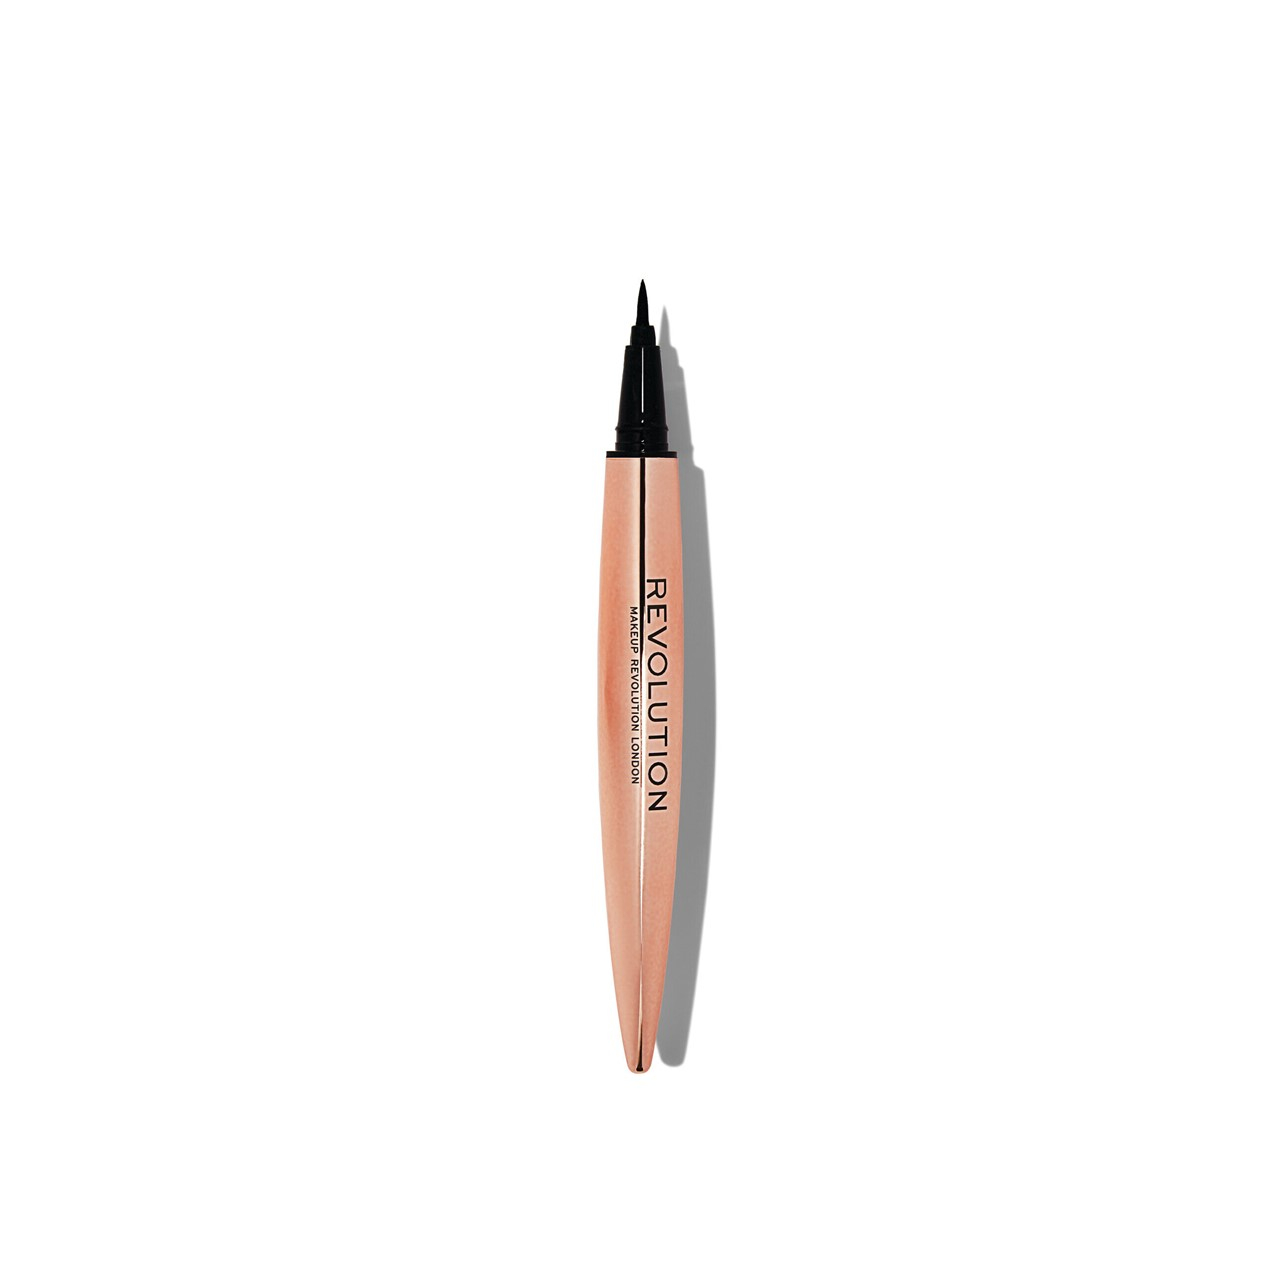 Makeup Revolution Renaissance Flick Eyeliner Black 0.8ml (0.03fl oz)